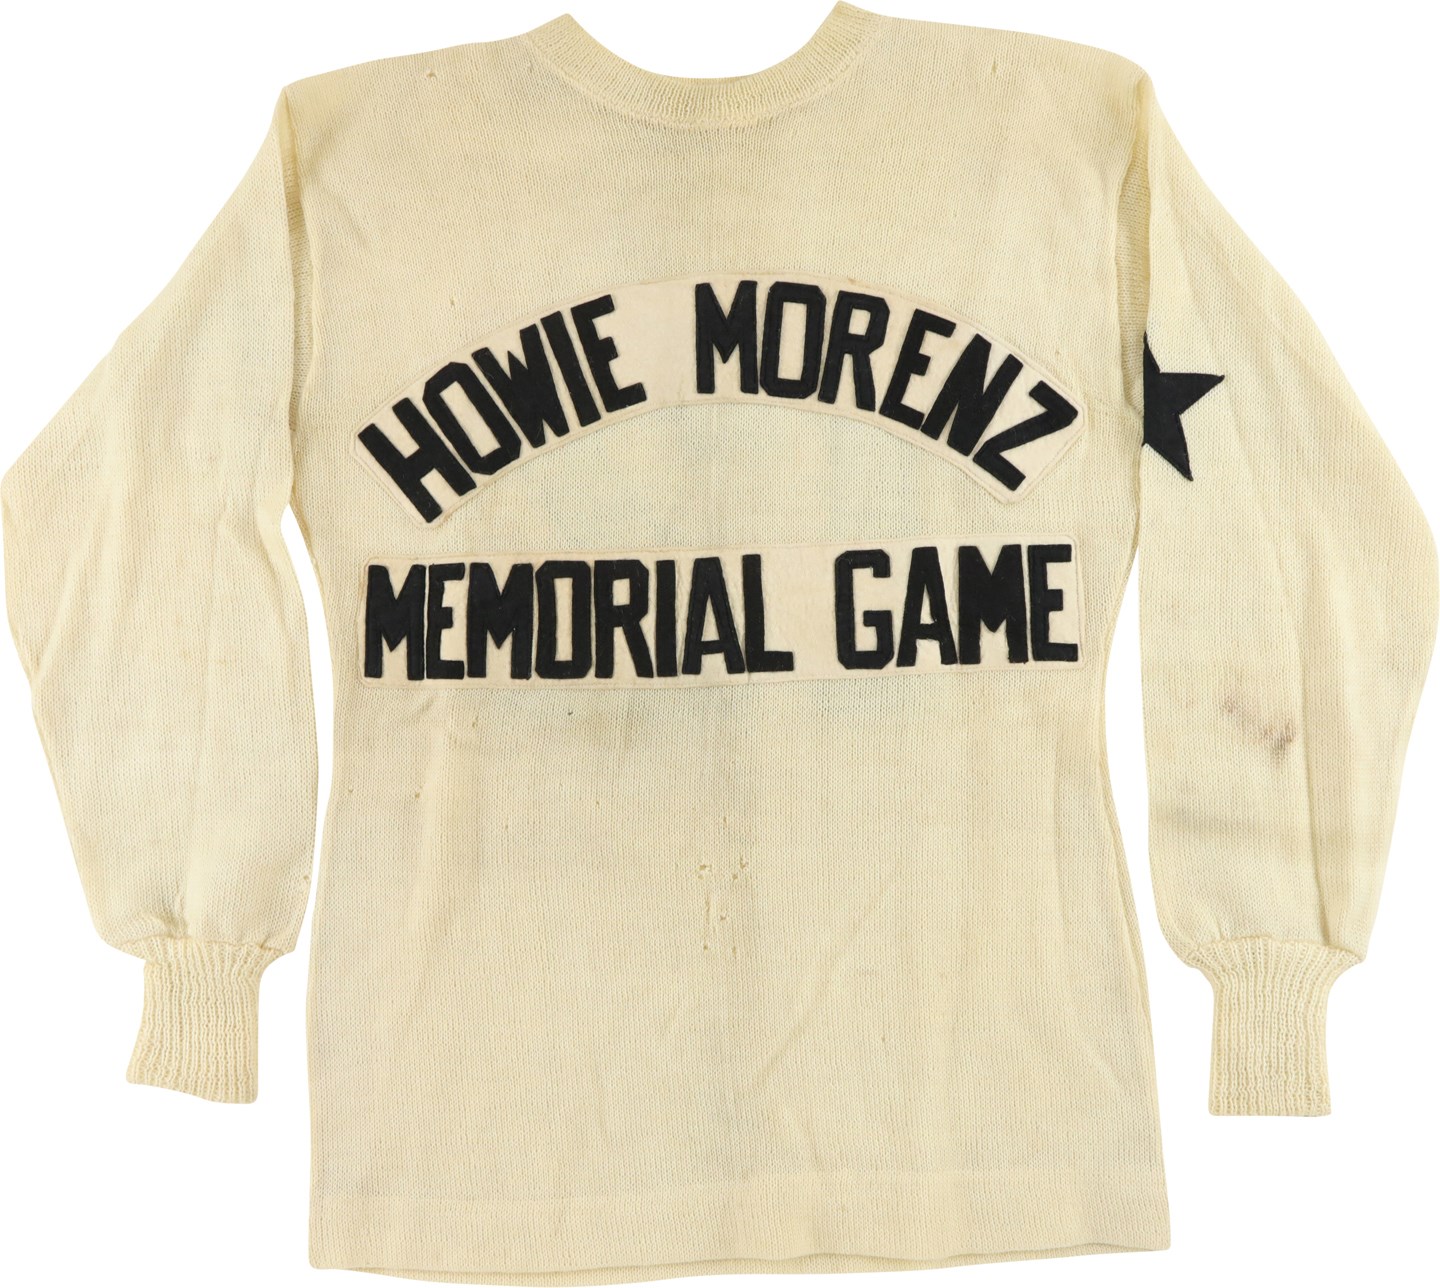 - 1937 Howie Morenz All-Star Game Worn Jersey Worn by Johnny Gottselig